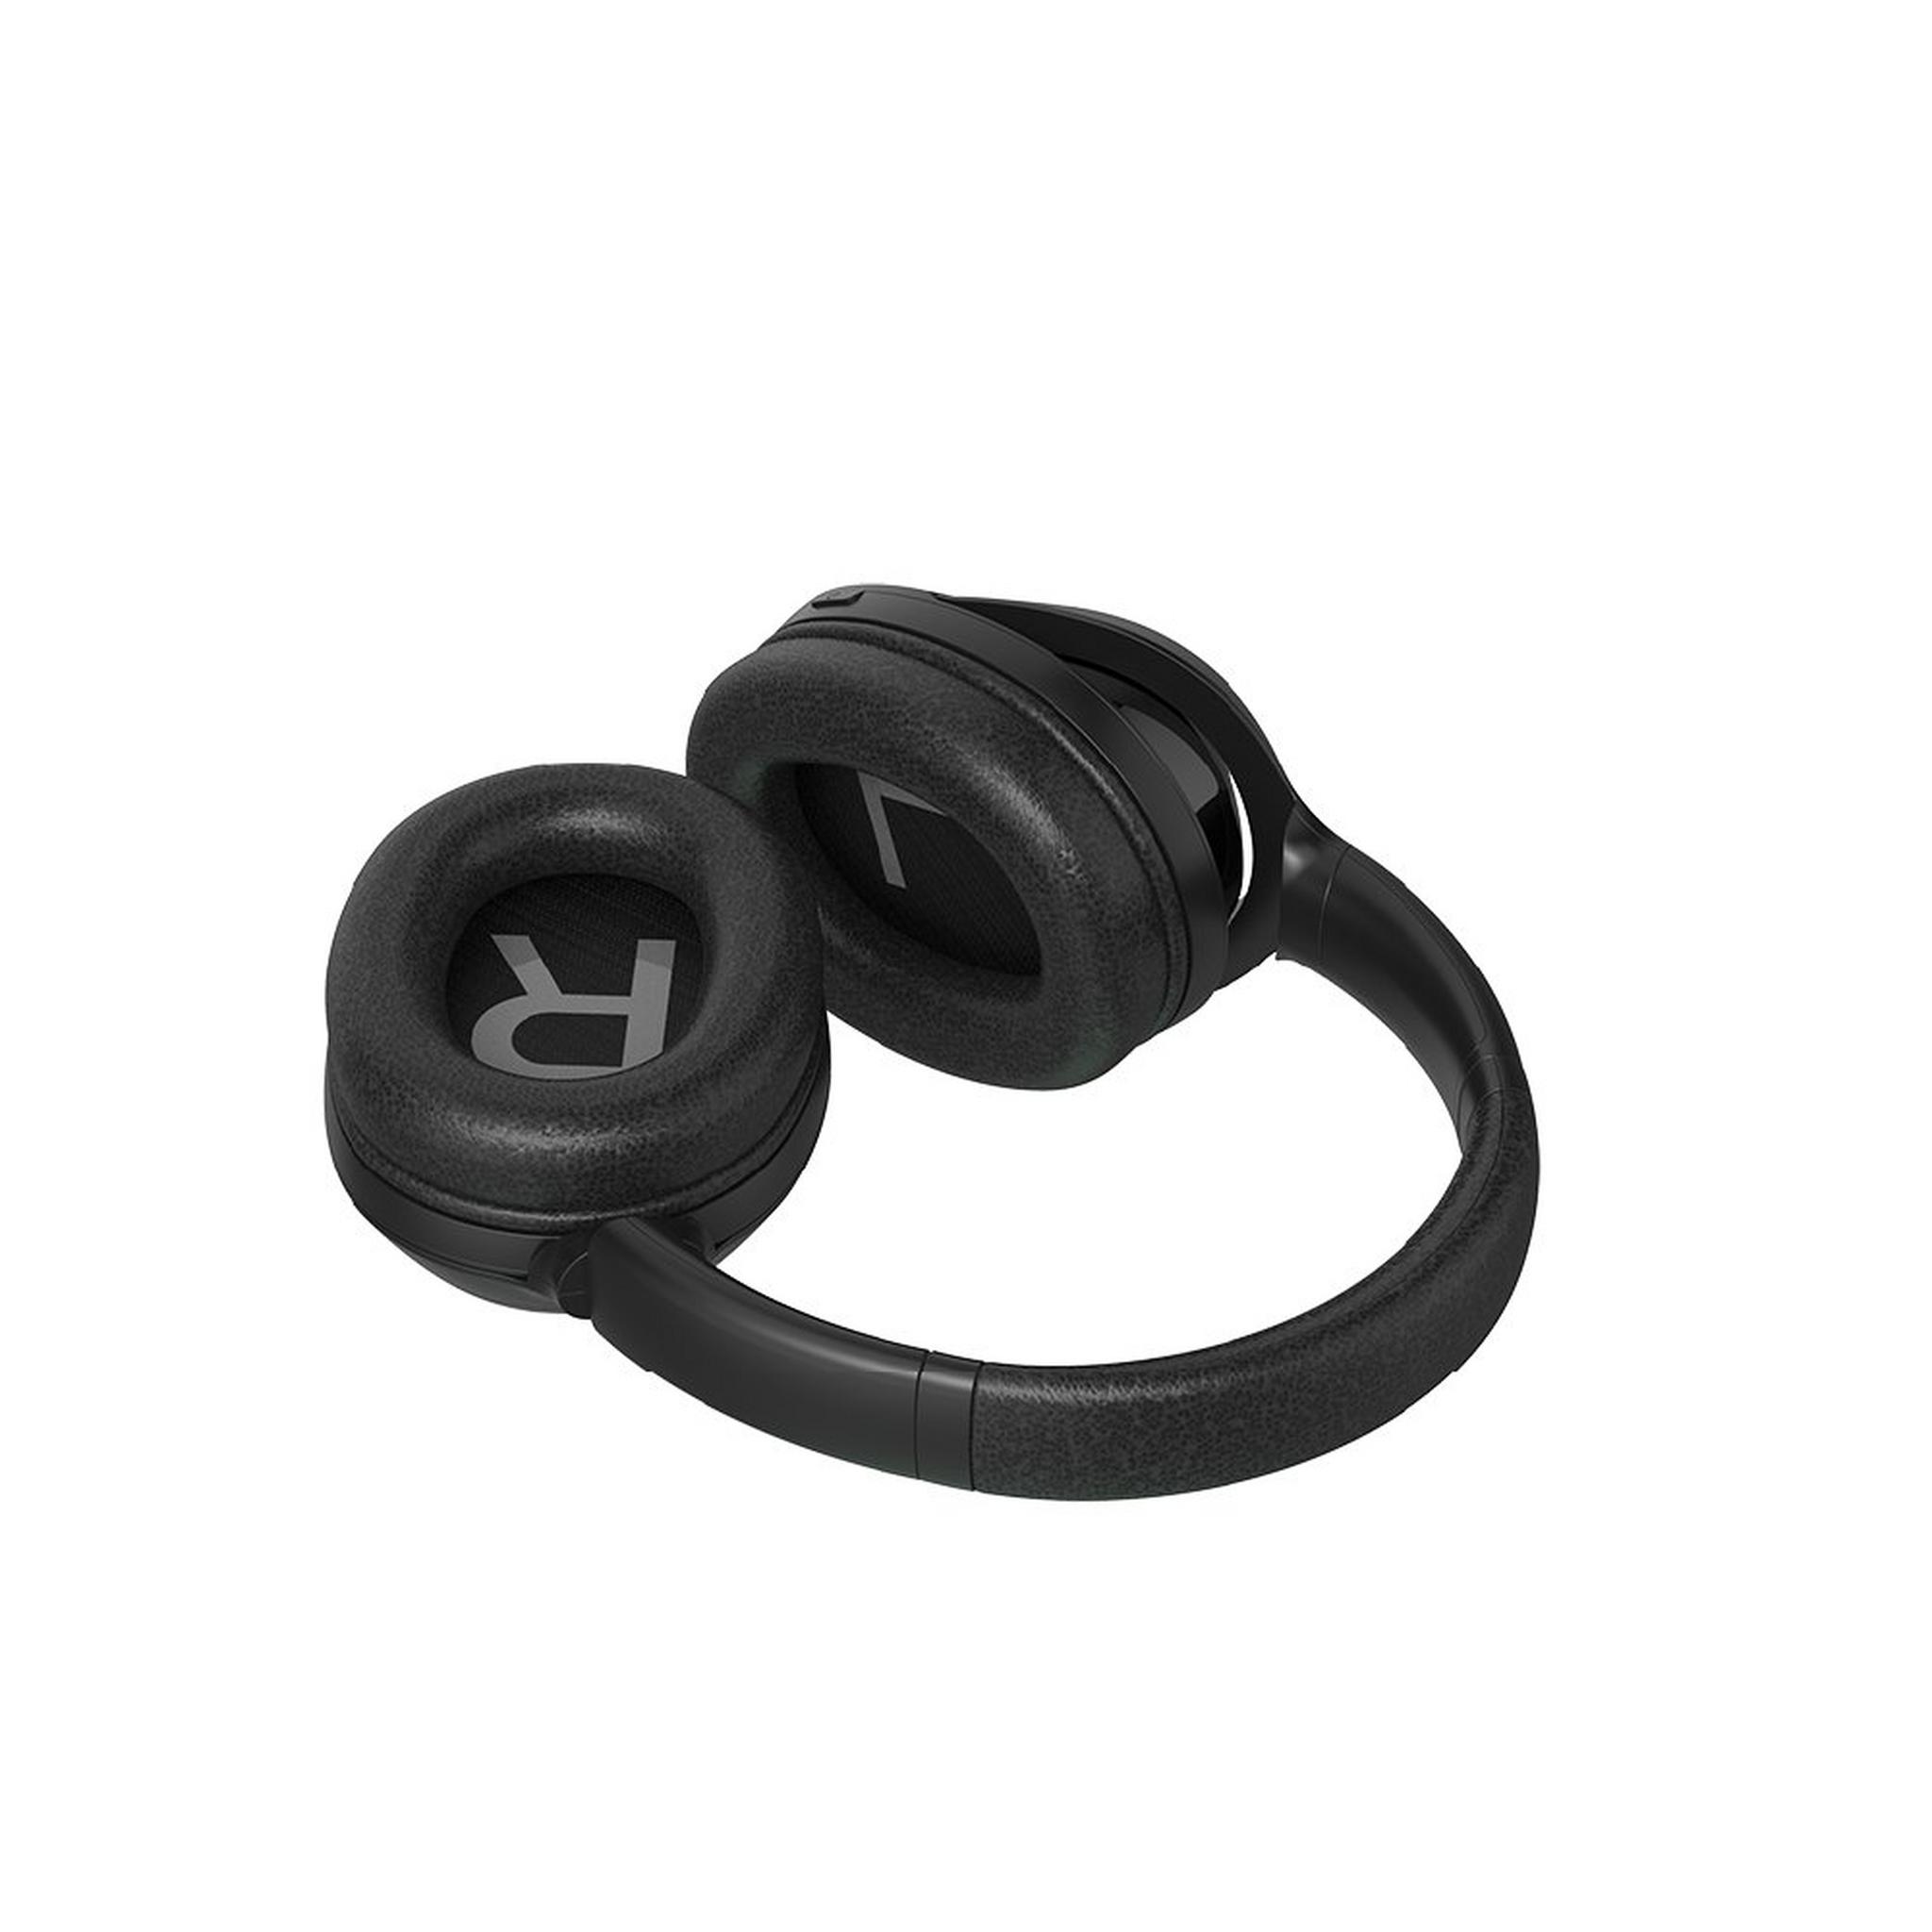 PHILIPS ANC Pro Wireless headphone, TAH8856BK/97 - Black